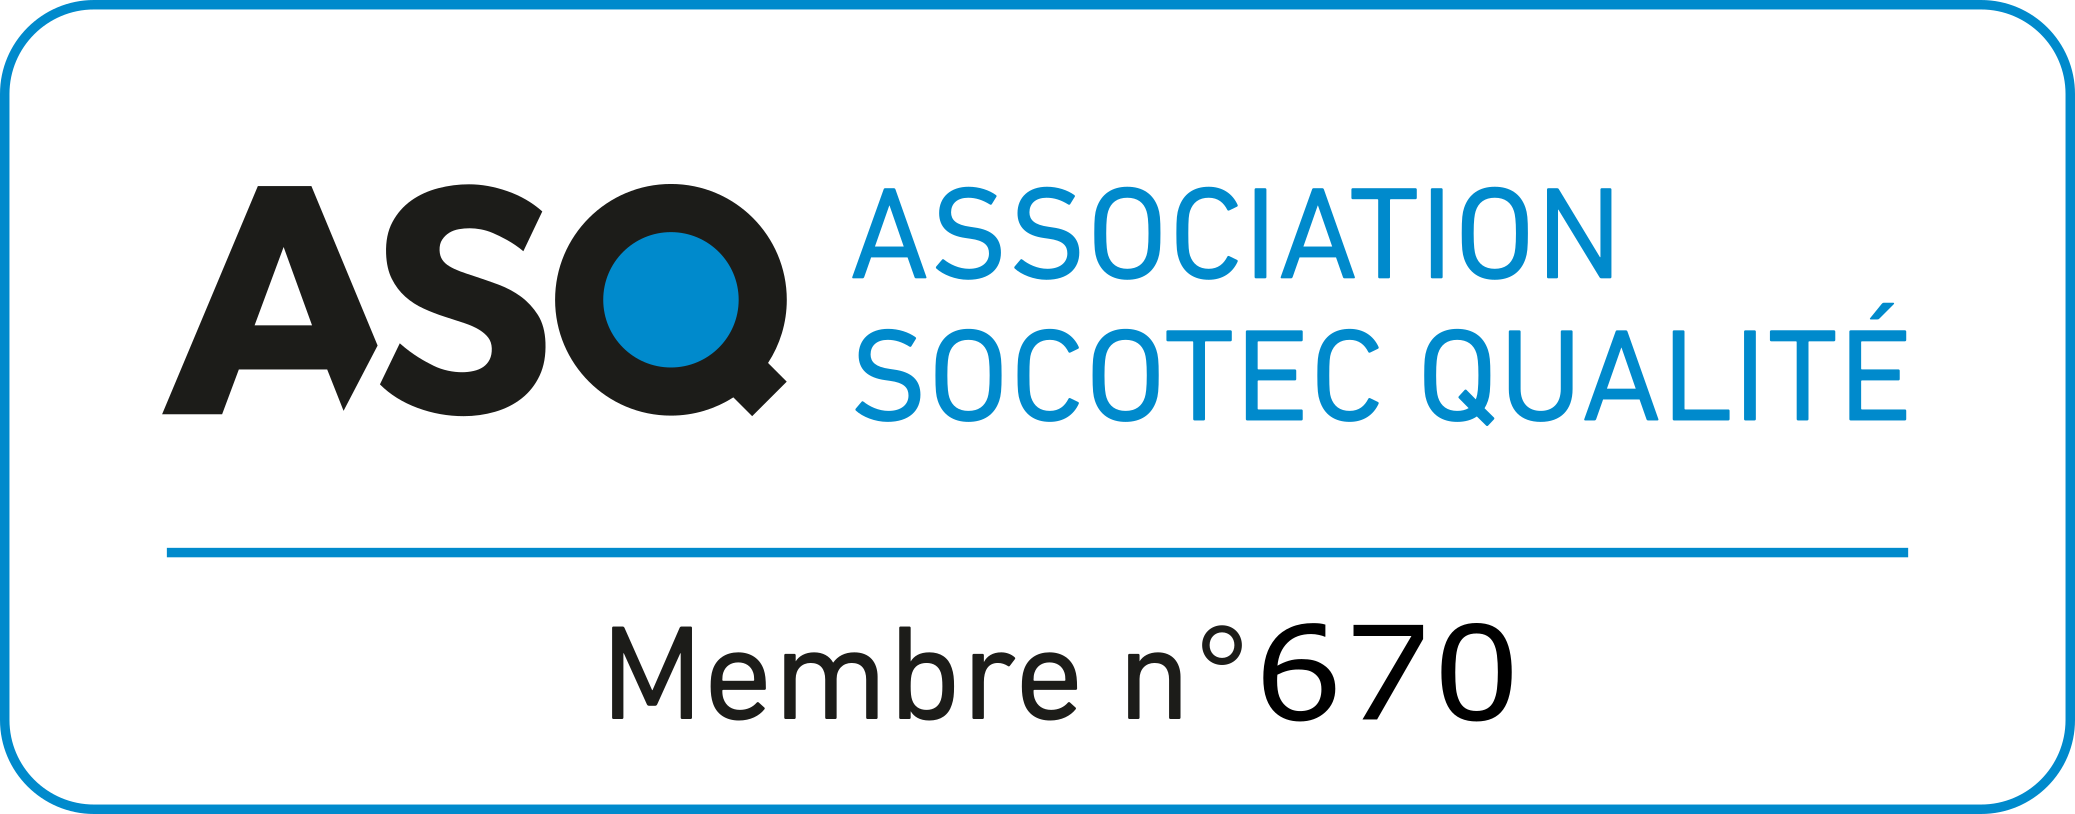 Association Socotec qualité - membre 670